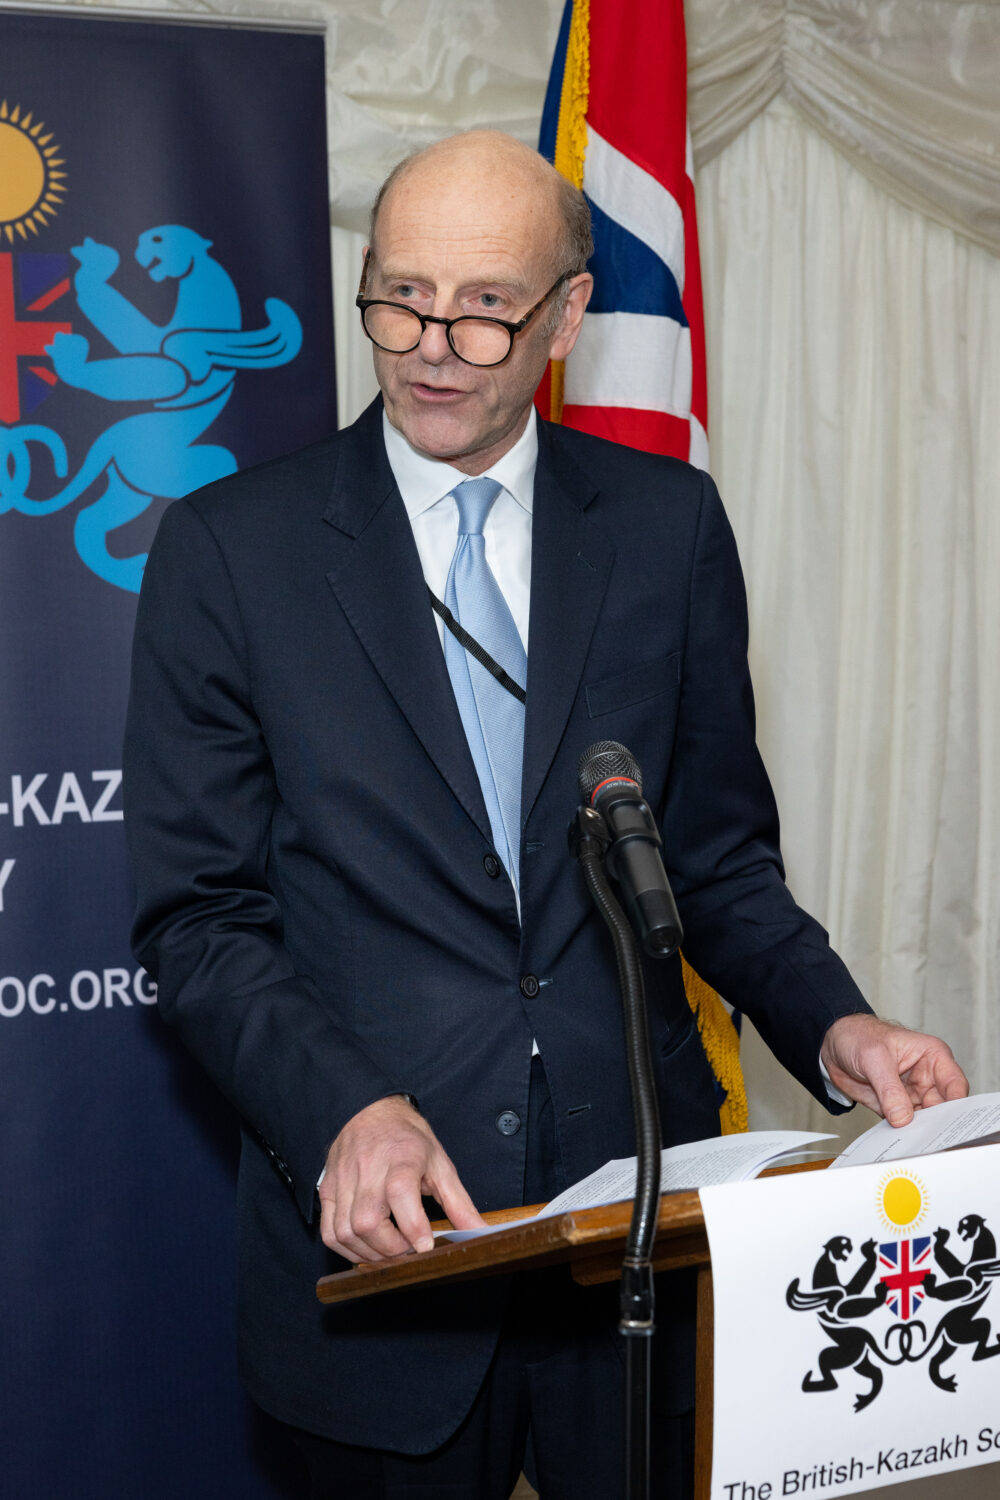 Rupert Goodman, Chairman of the British-Kazakh Society